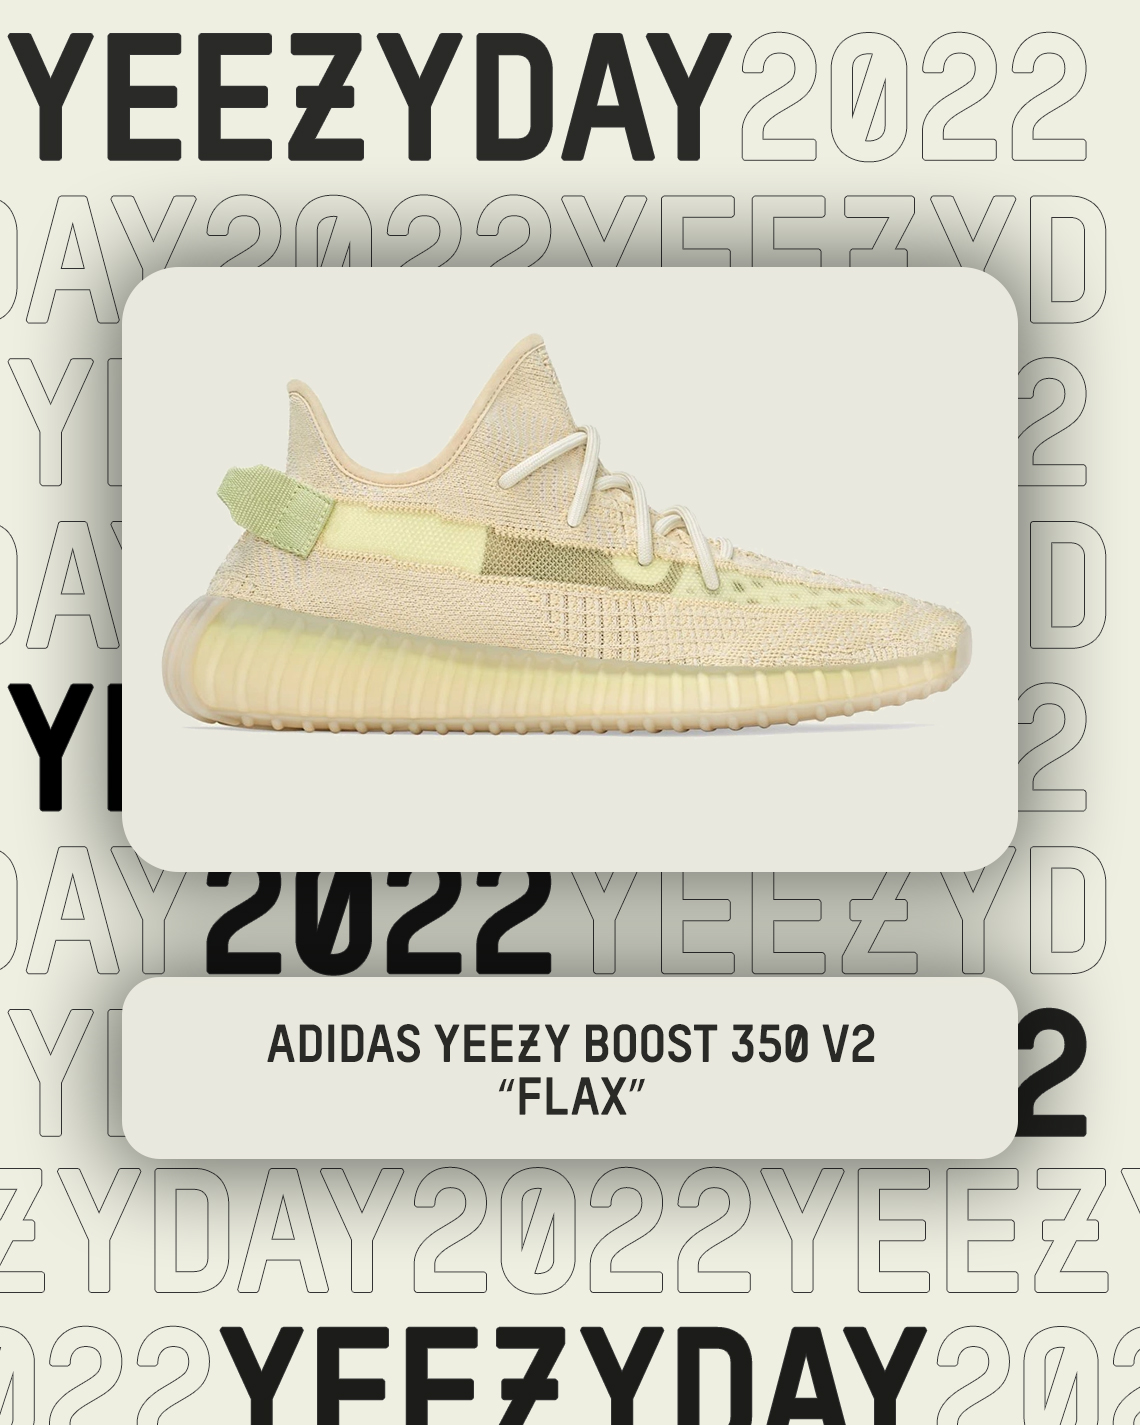 Yeezy Day 2022 adidas solar hu pack V2 Flax